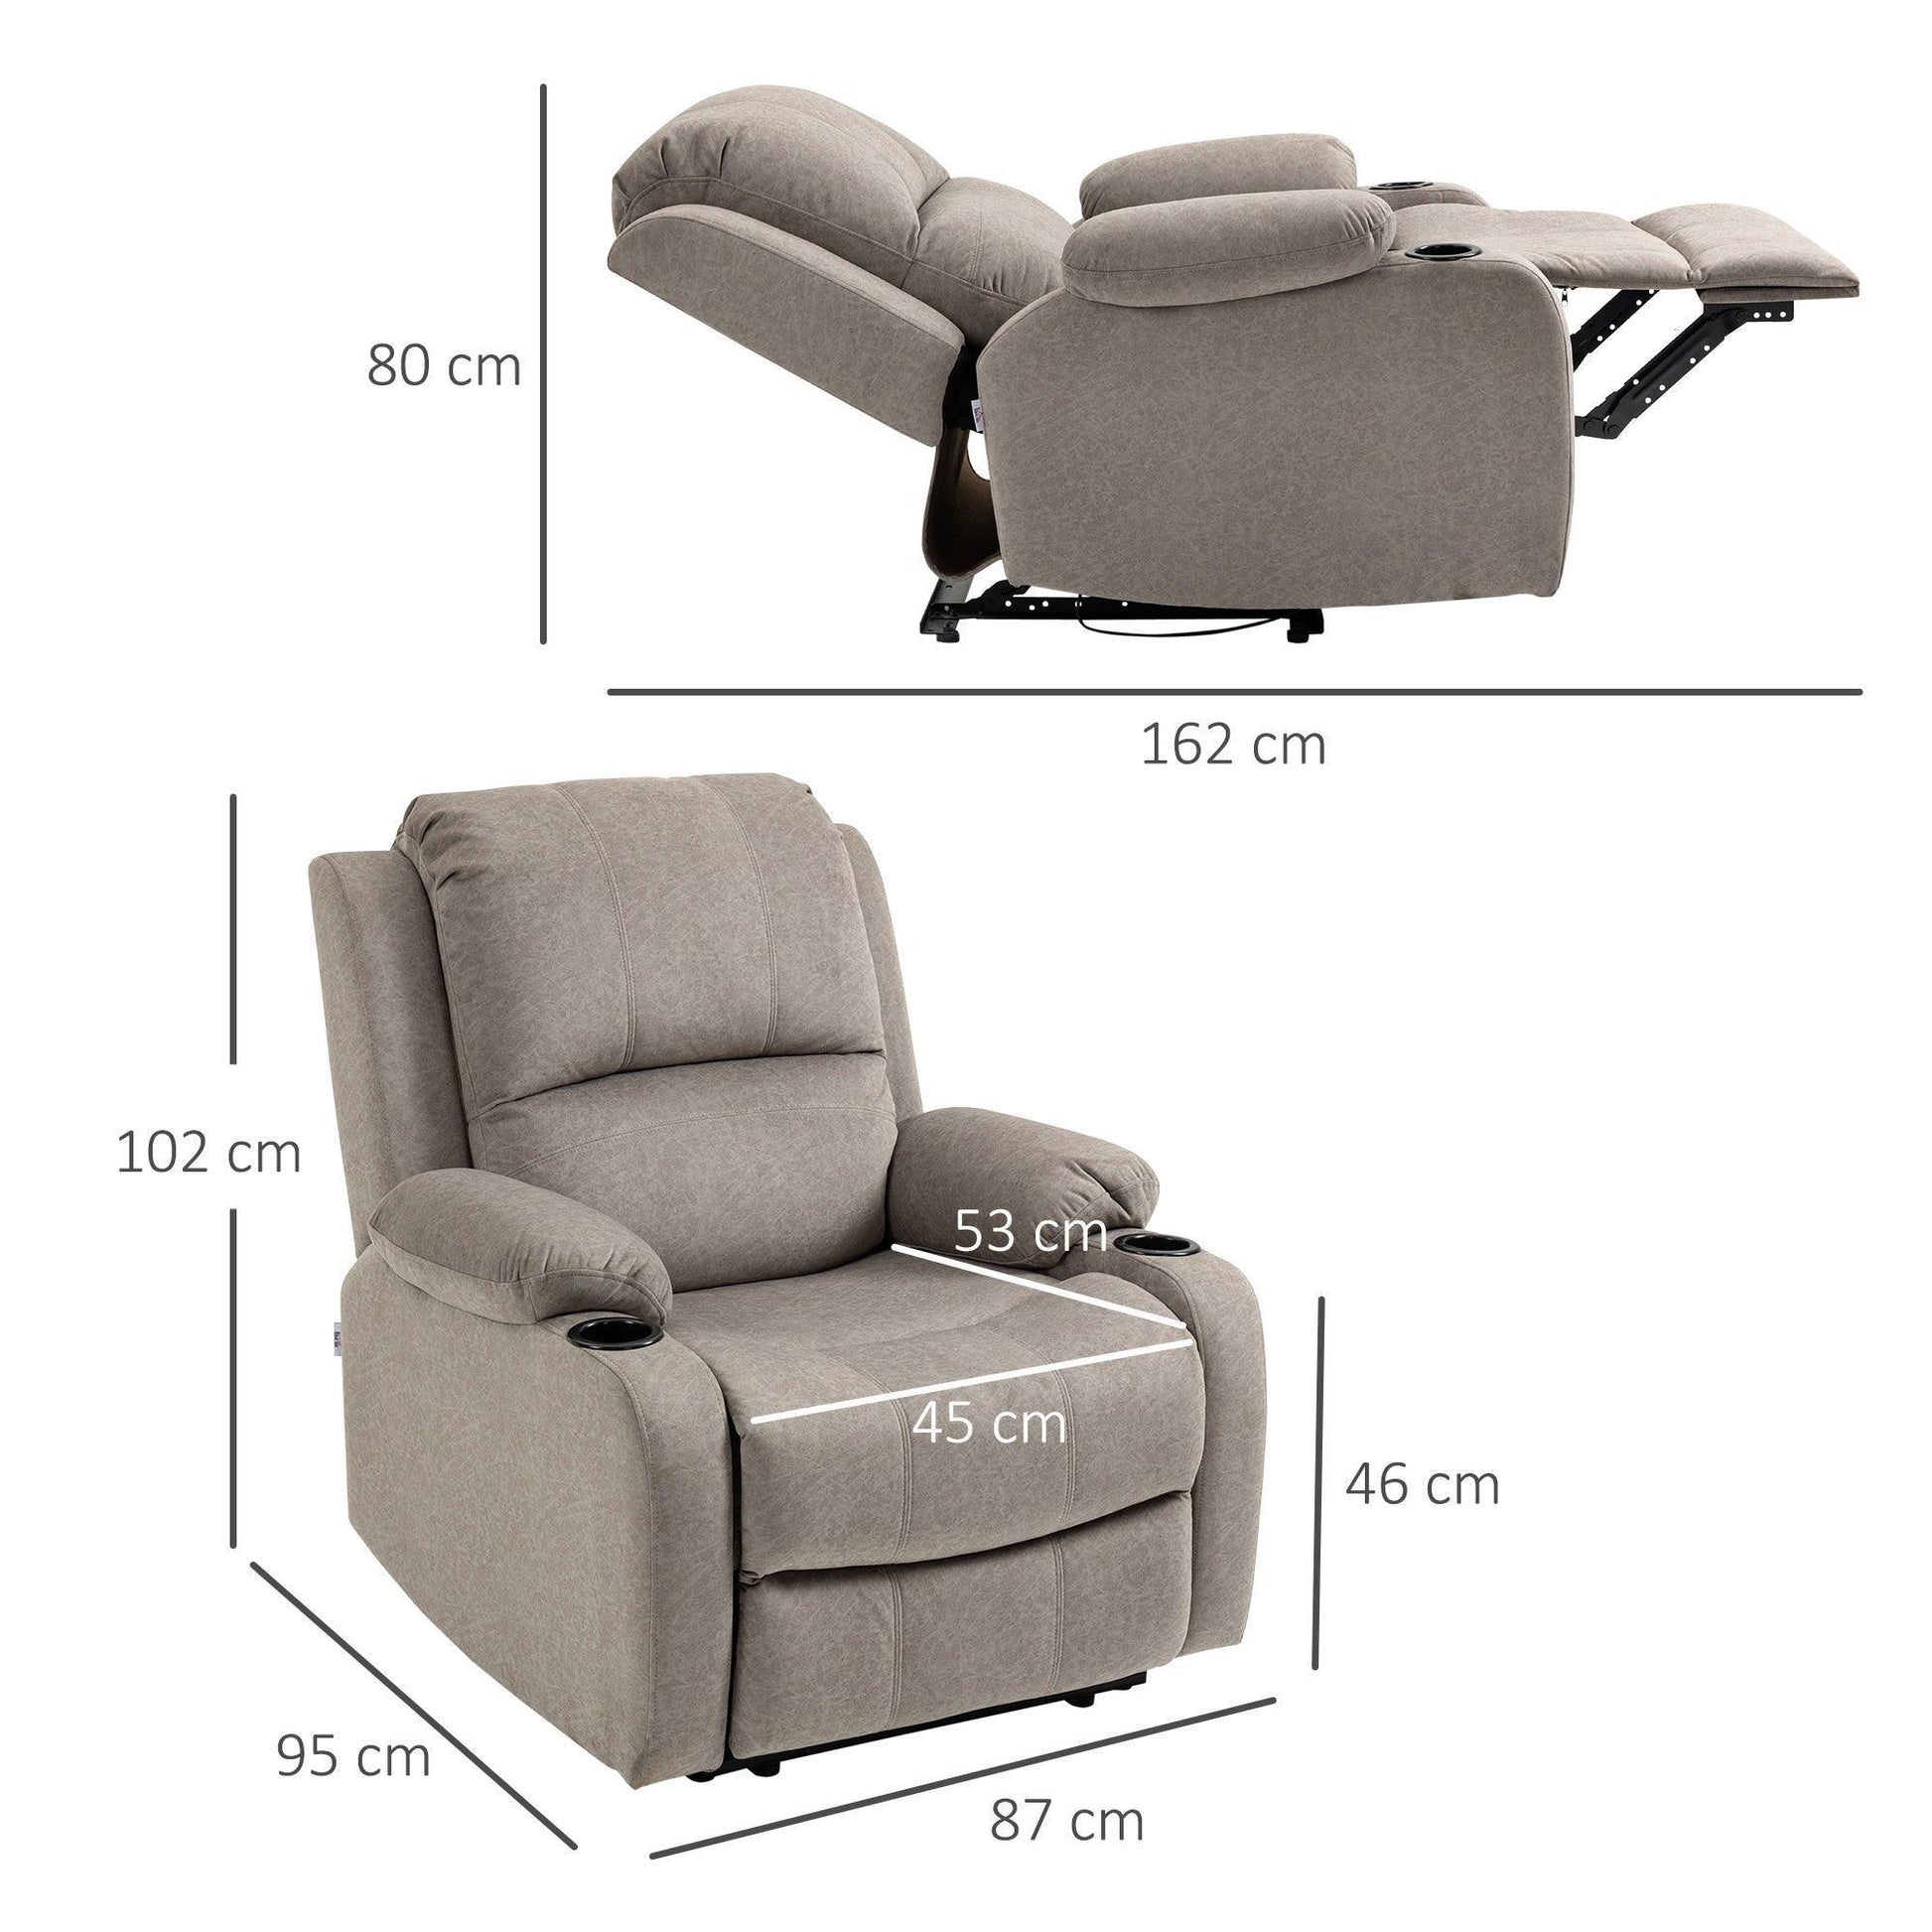 HOMCOM Recliner Armchair with Adjustable Leg Rest - Brown - ALL4U RETAILER LTD